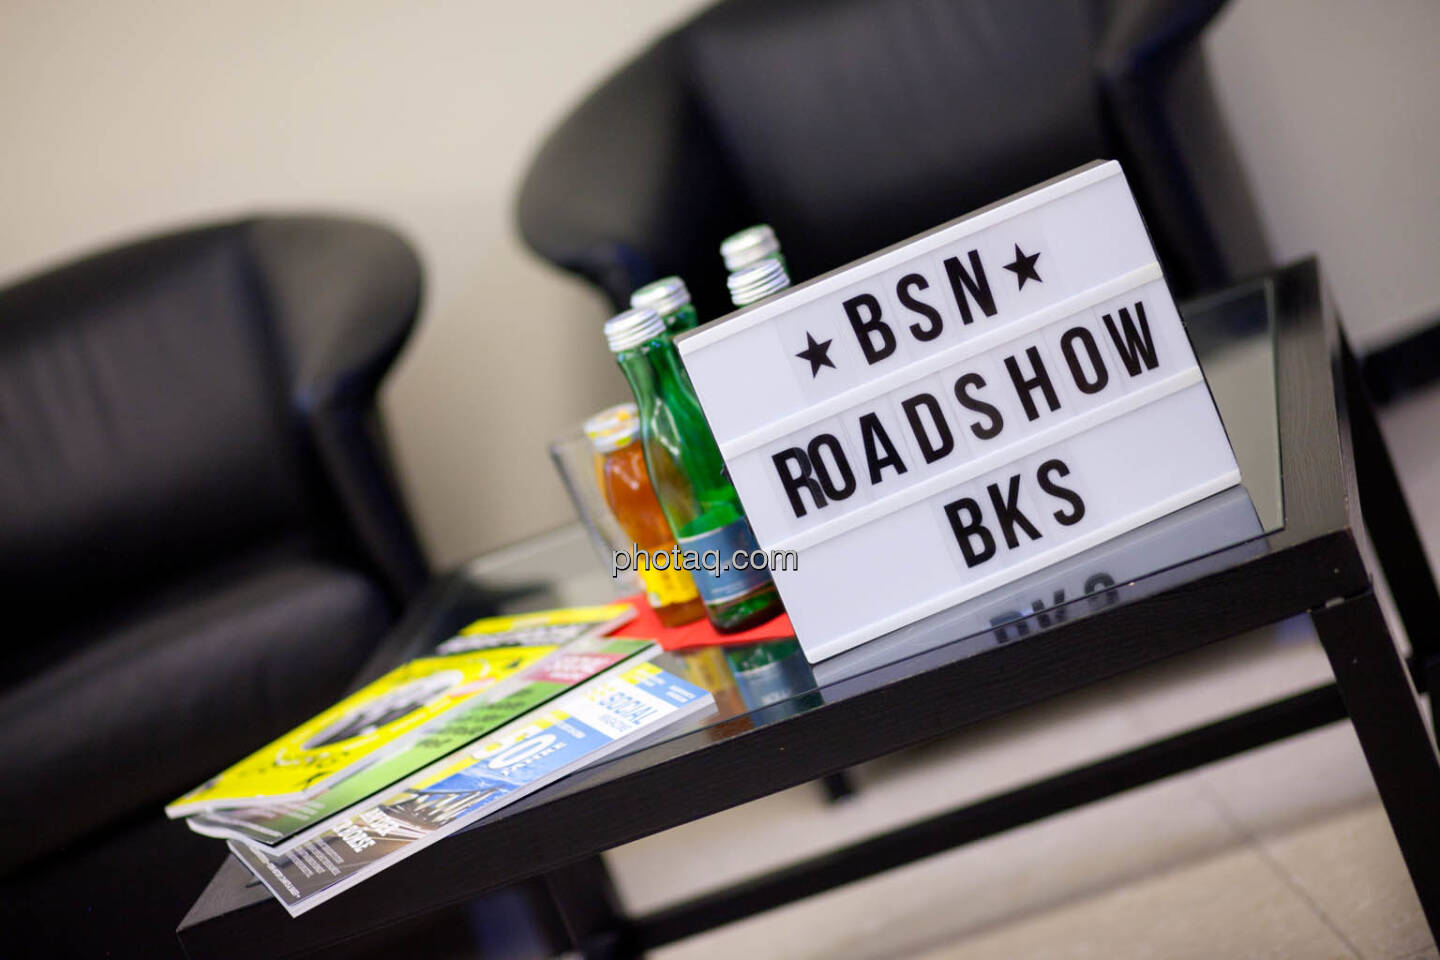 BSN Roadshow @BKS